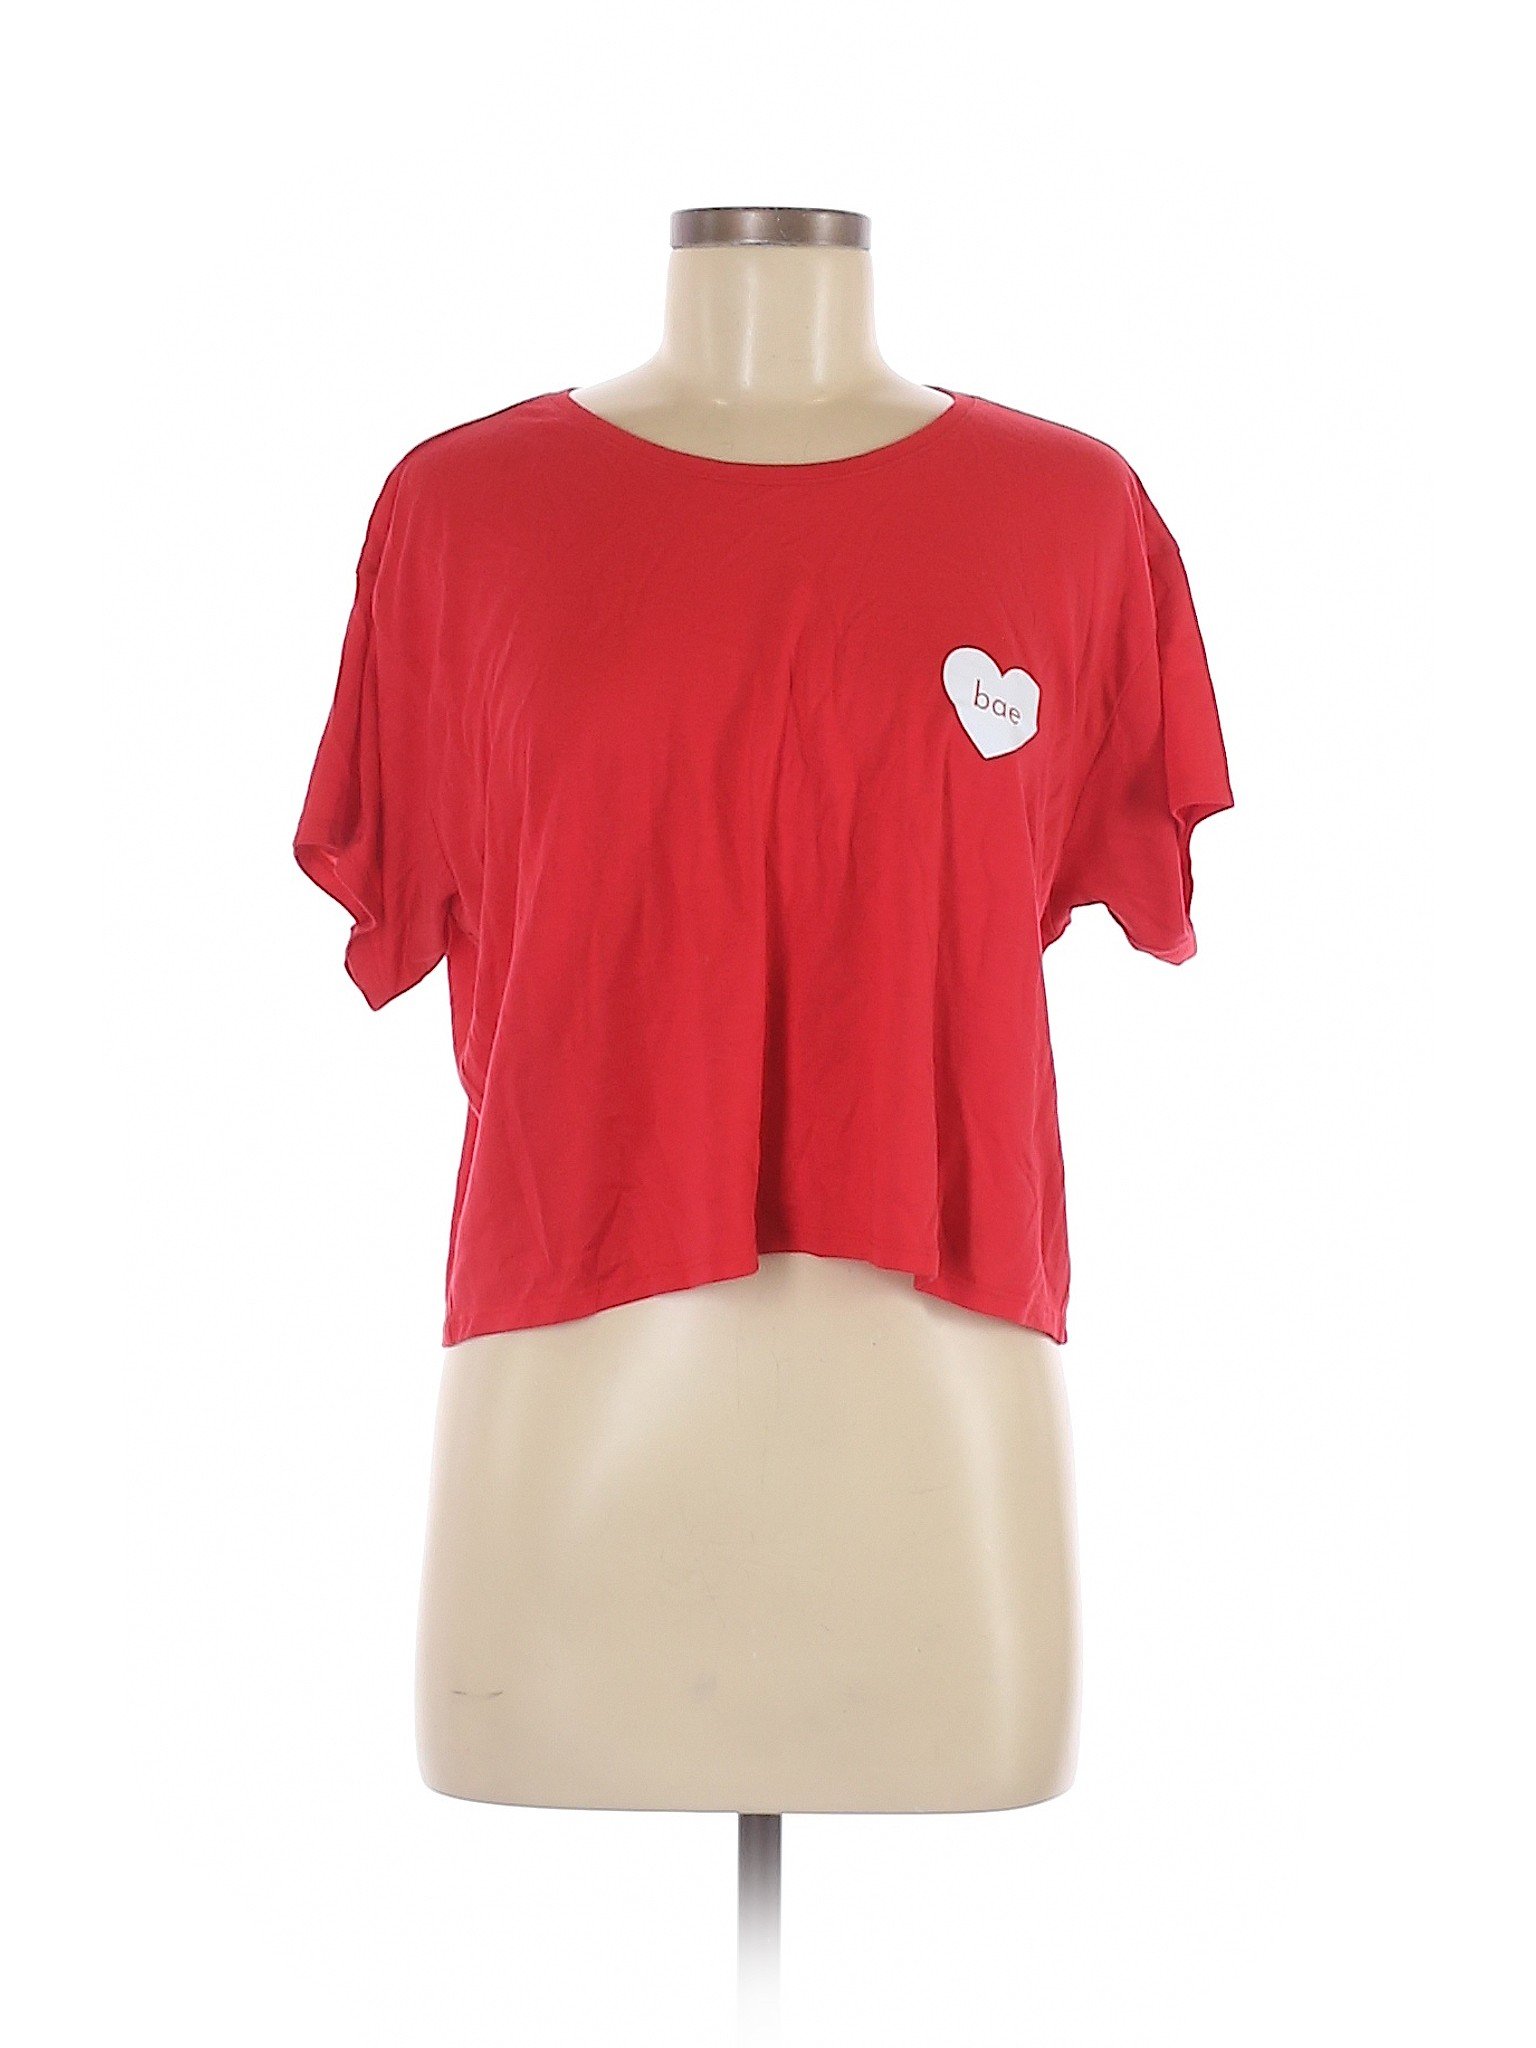 BCBGeneration Women Red Short Sleeve T-Shirt M | eBay